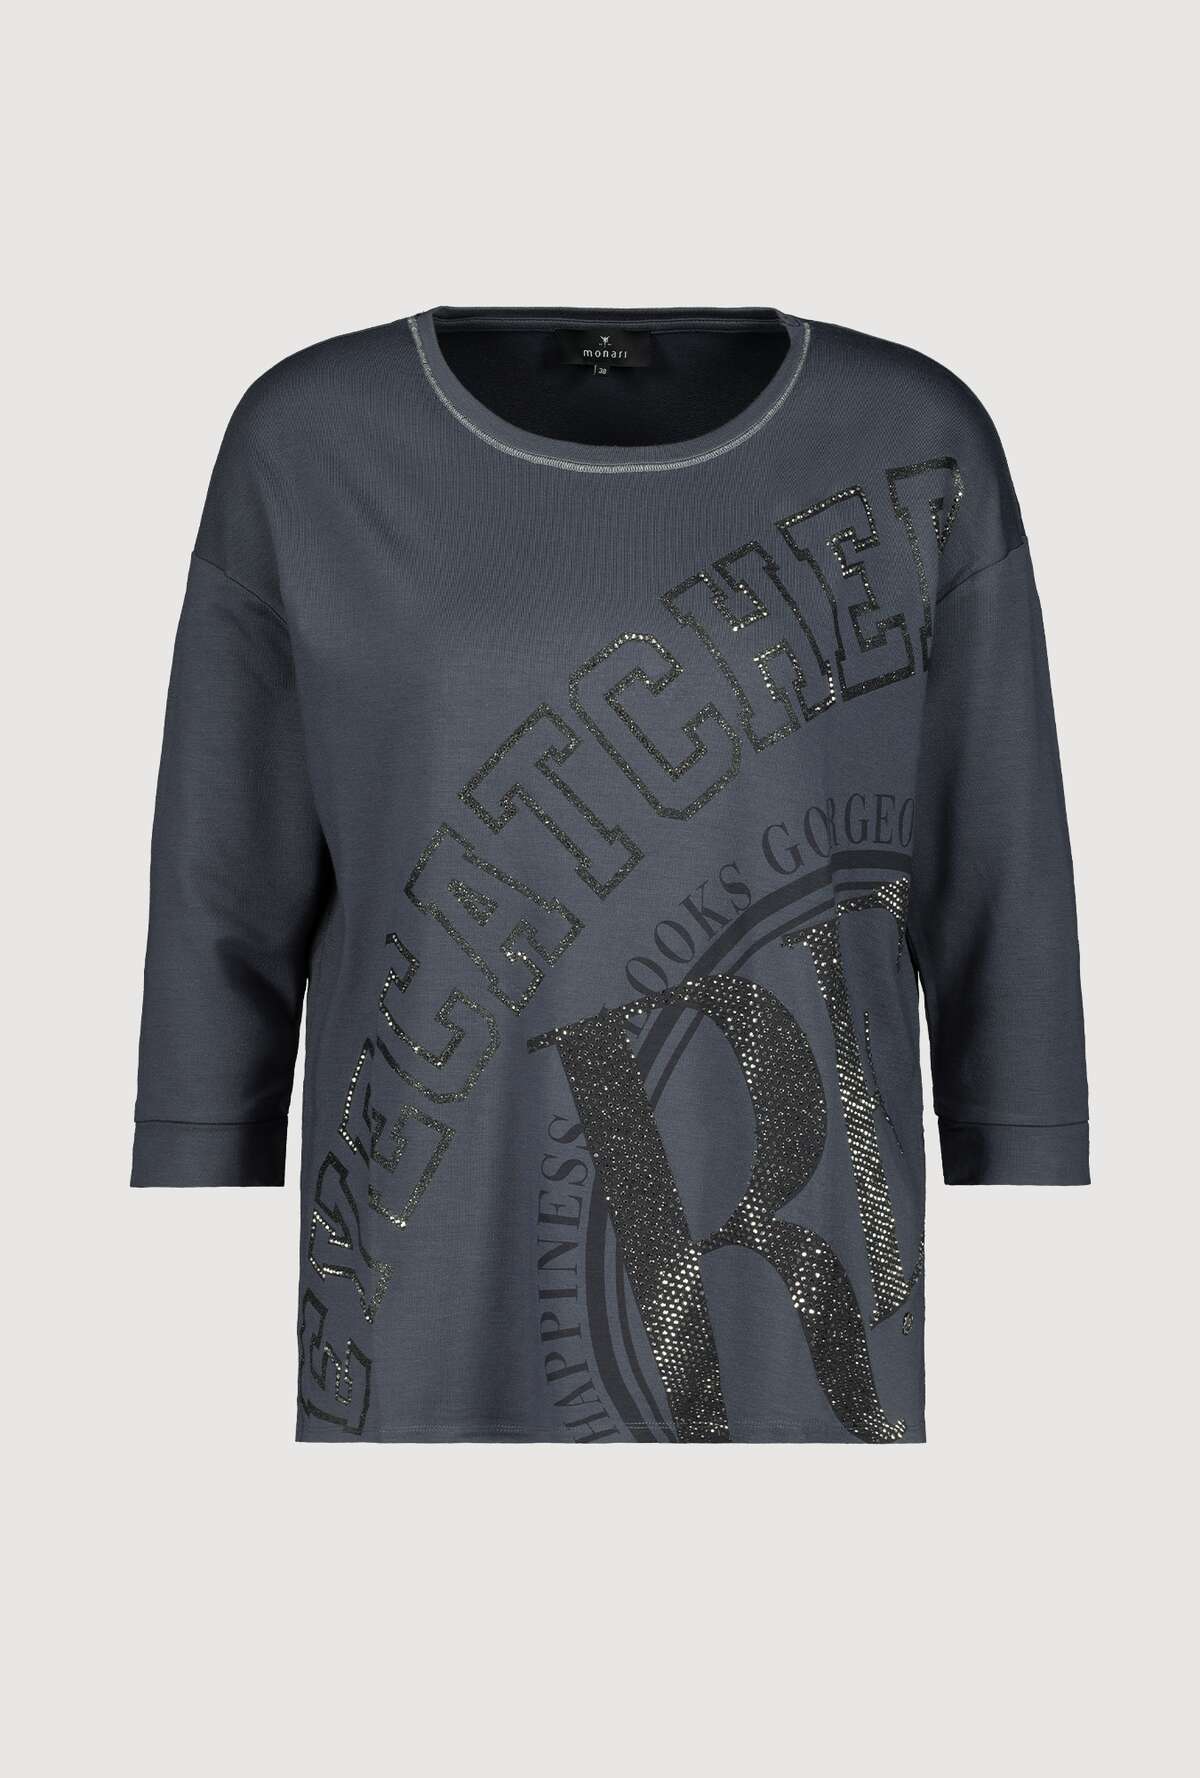 Shop Jersey T-Shirt with Rhinestones - Monari